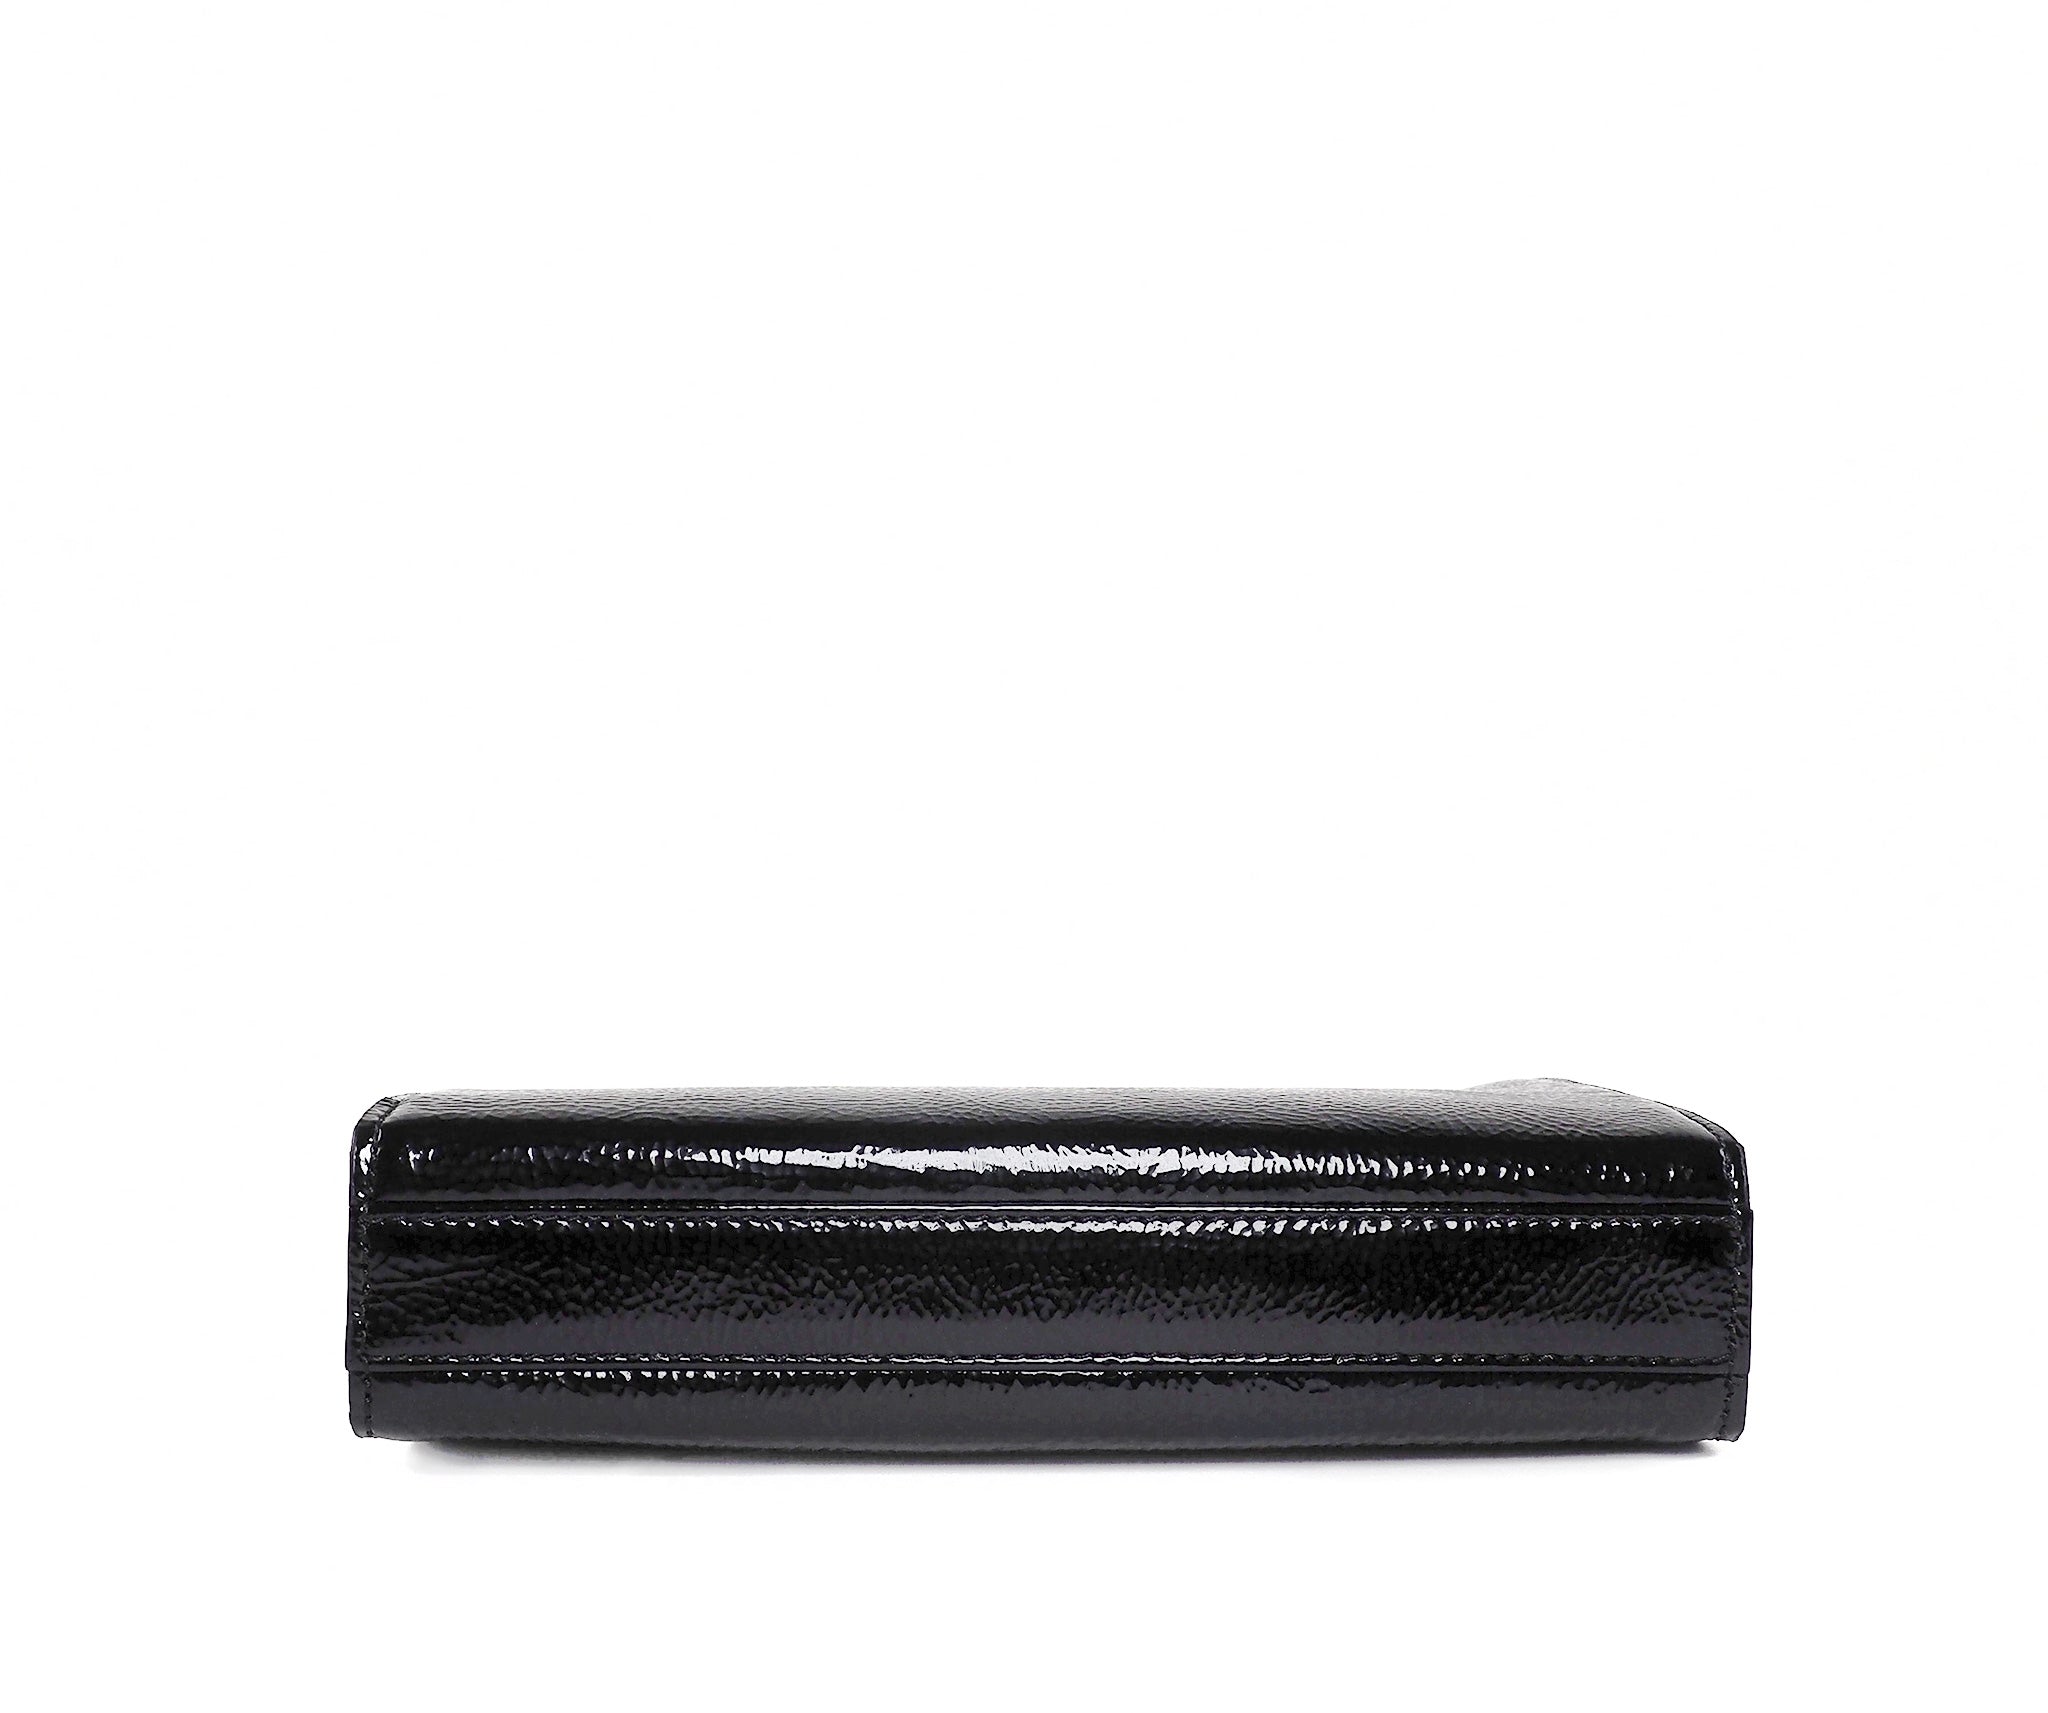 ANDE' Black Patent Leather Vintage Envelope Purse or Large | Etsy | Patent  leather handbags, Envelope purse, Leather